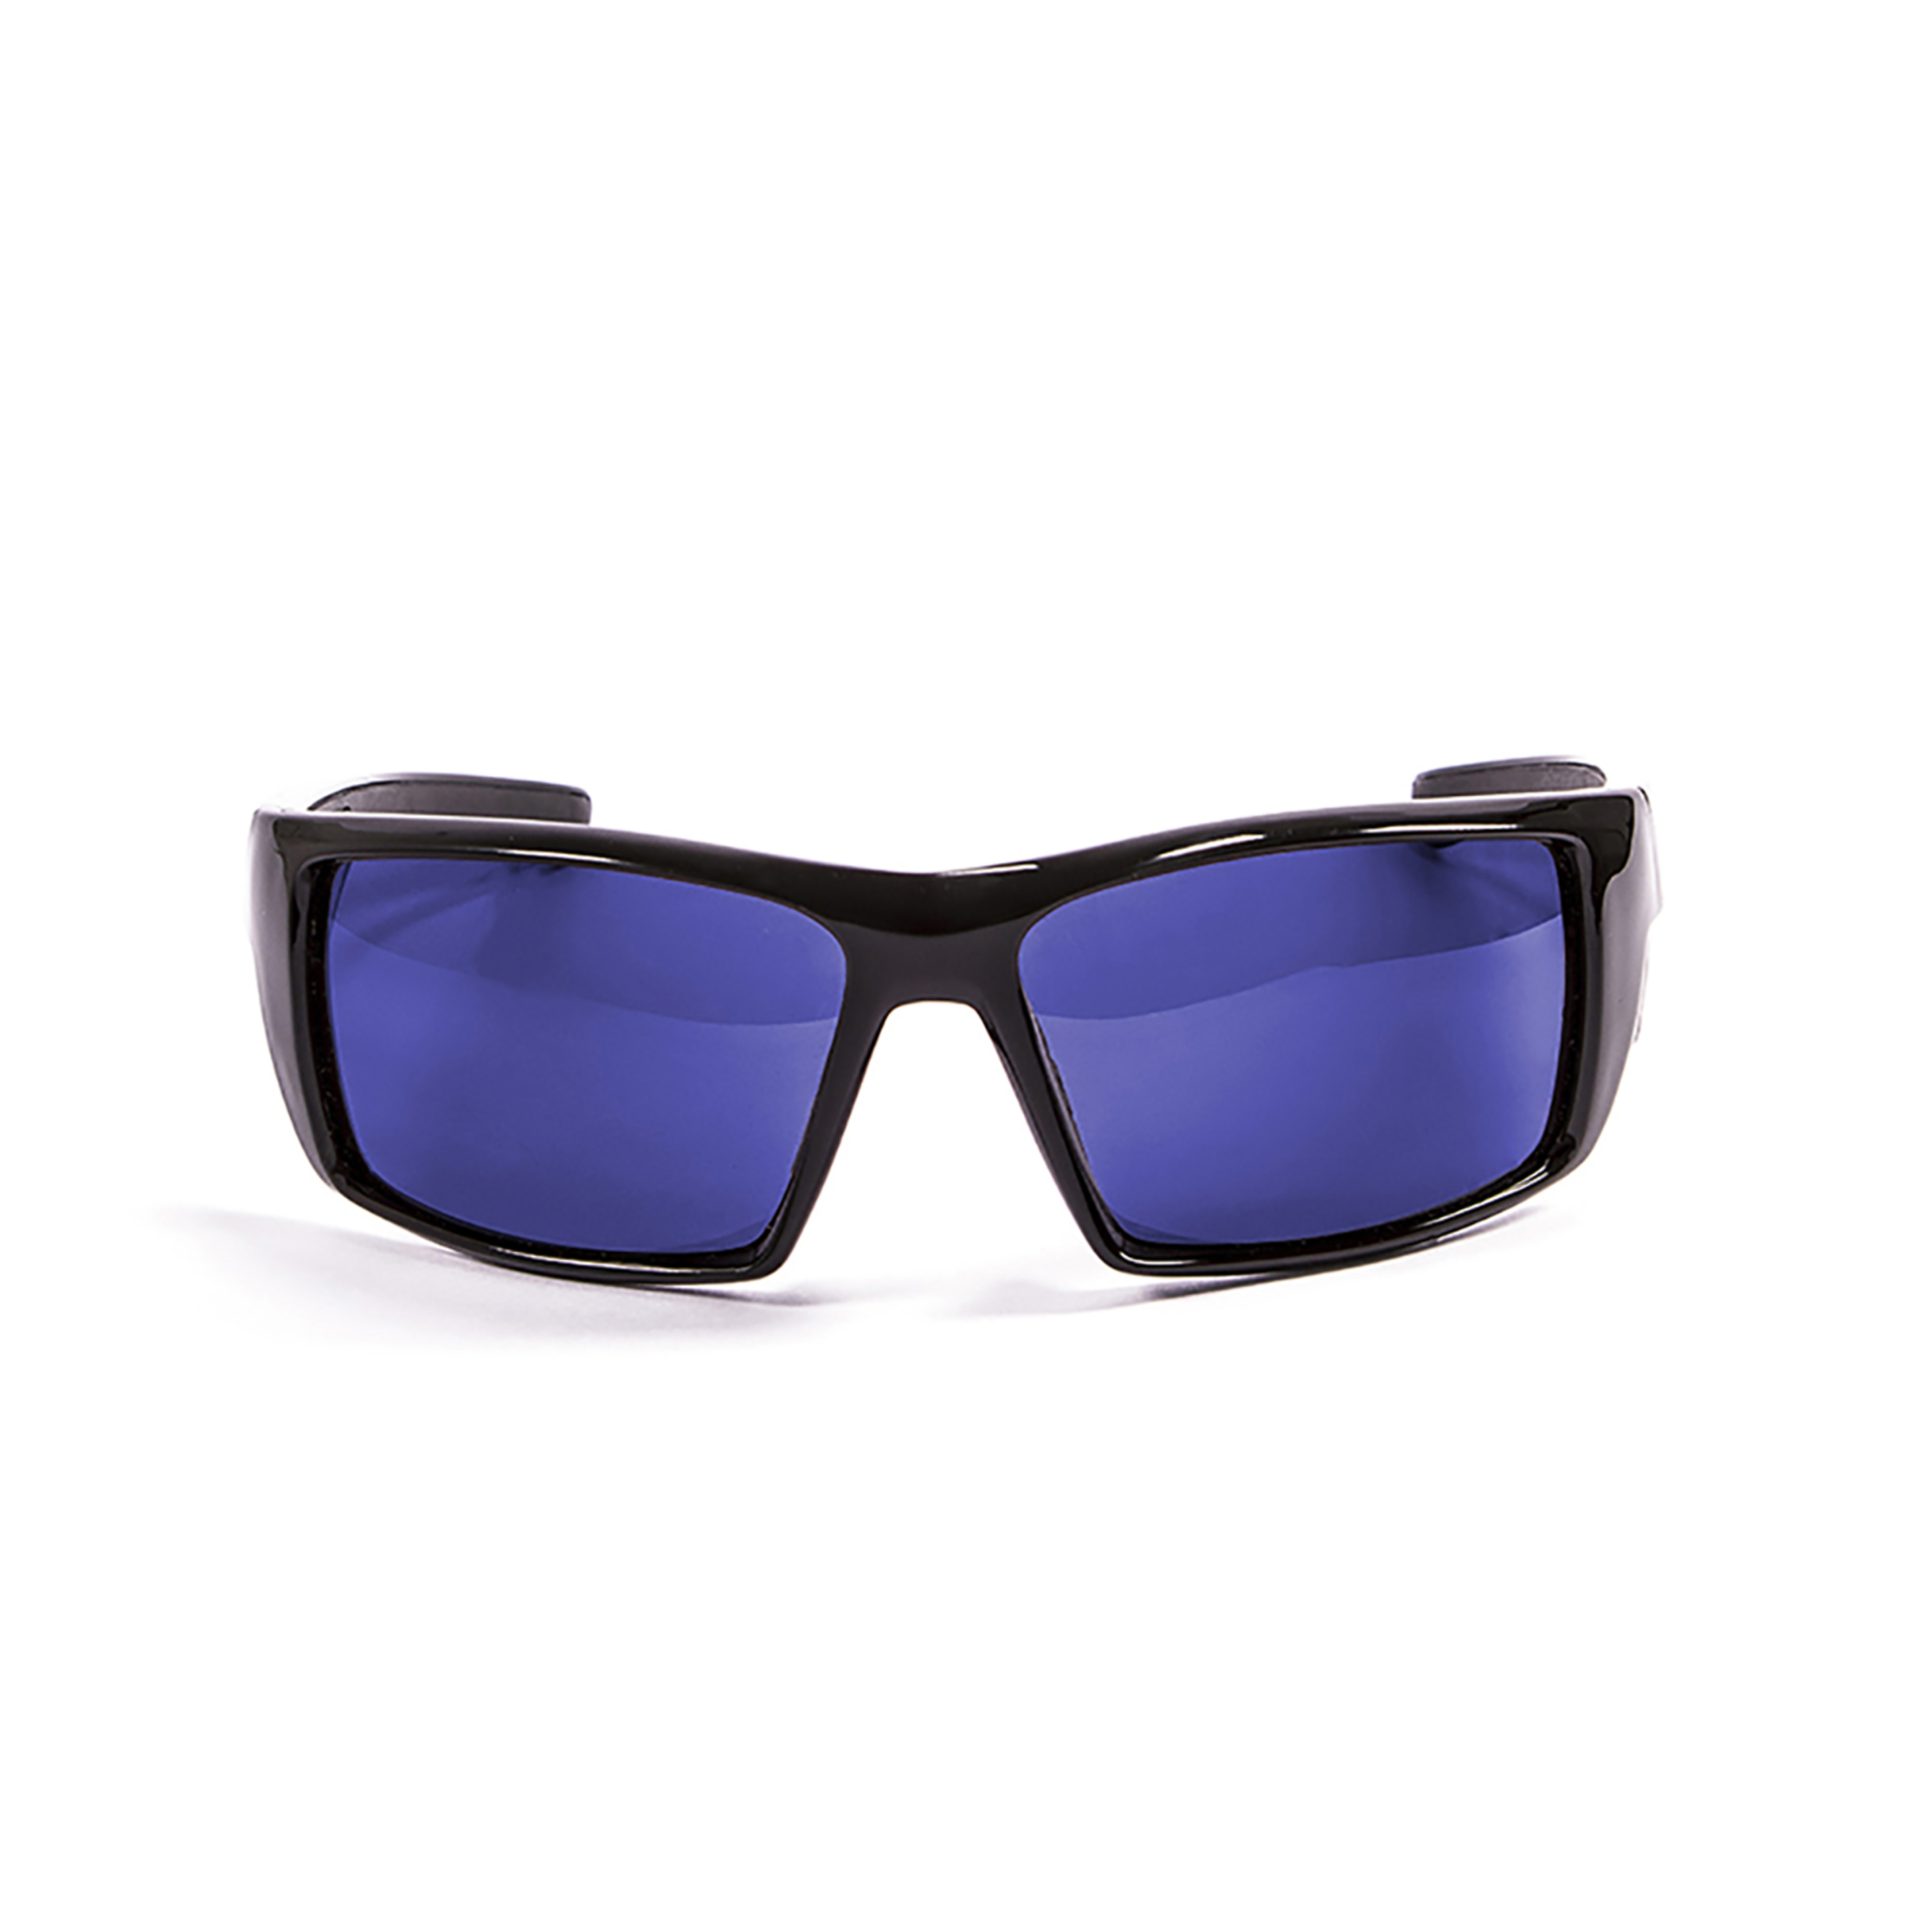 Gafas De Sol Técnicas Para La Práctica De Deportes De Agua Aruba Ocean Sunglasses